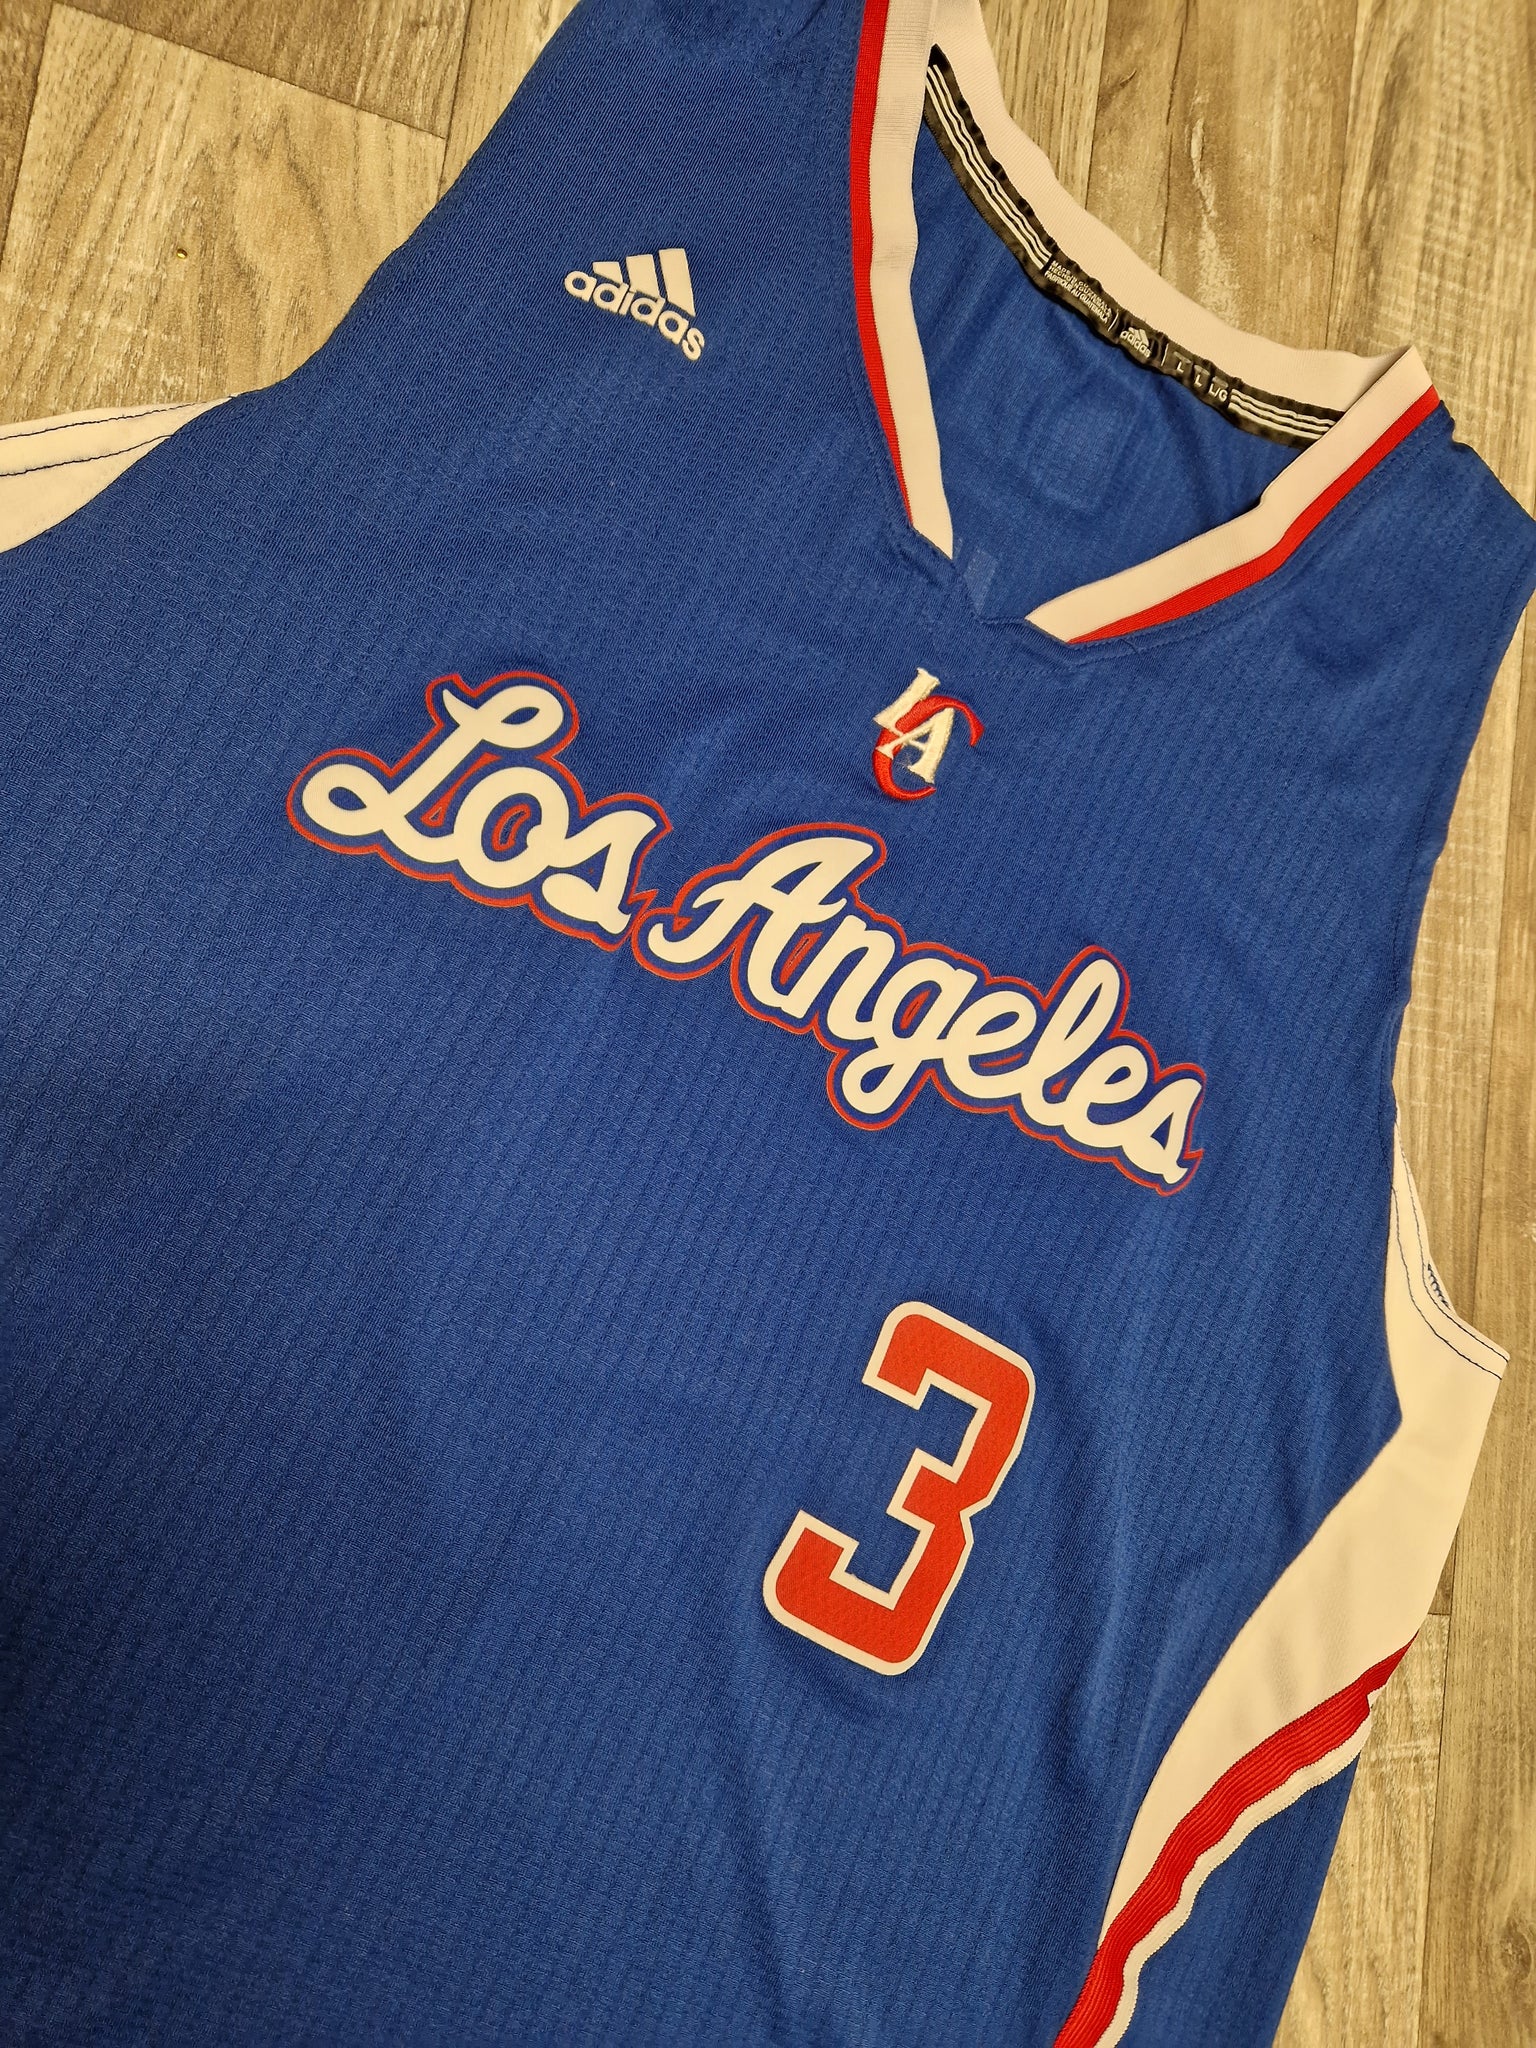 Chris Paul Los Angeles Clippers Basketball Jersey – Best Sports Jerseys